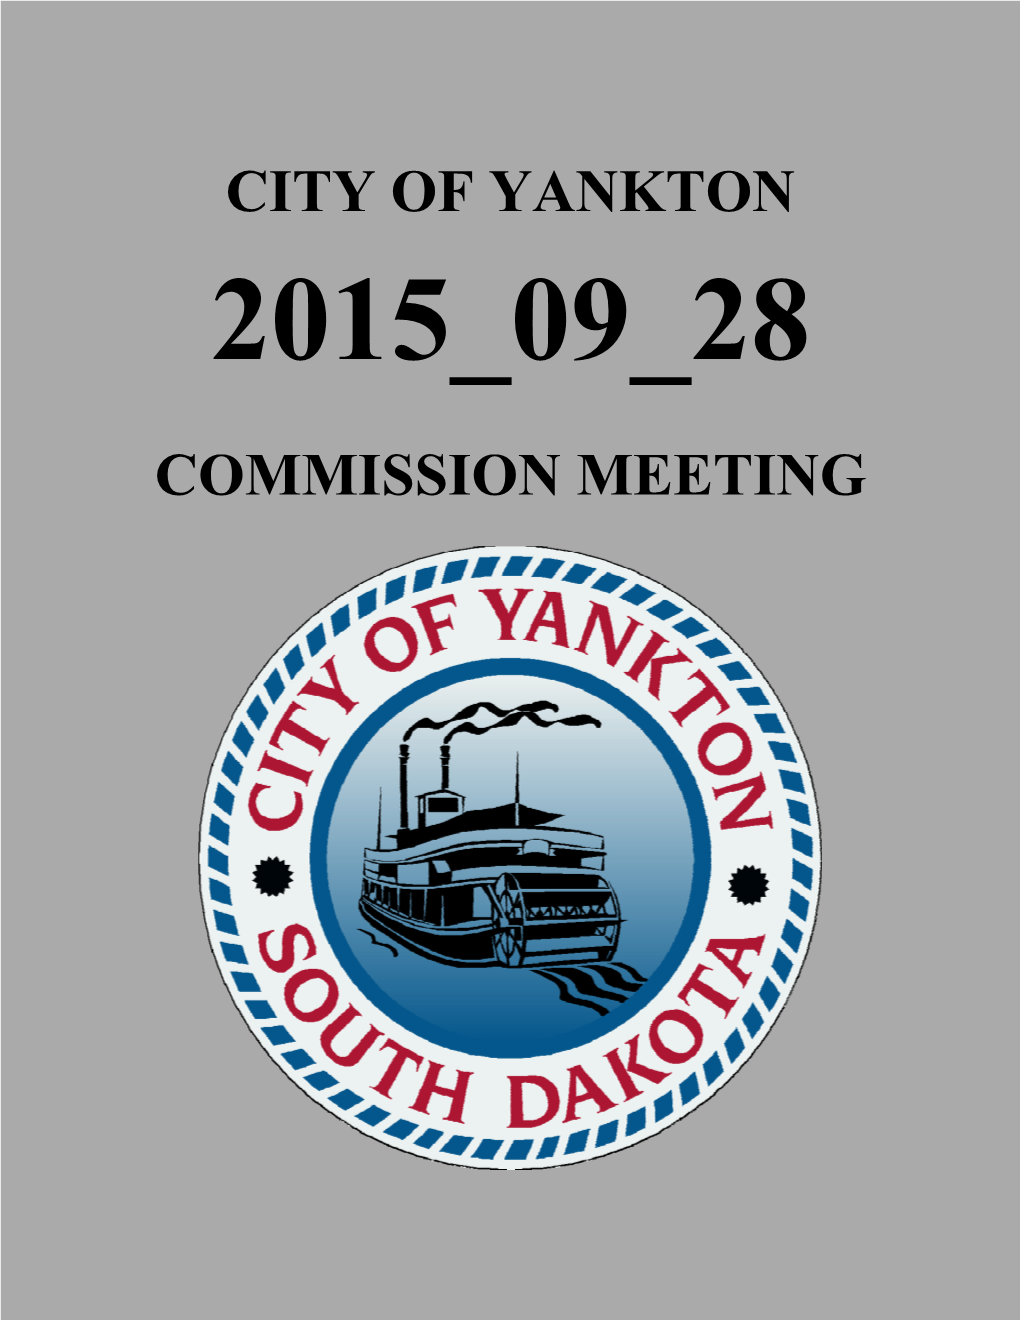 City of Yankton Commission Meeting